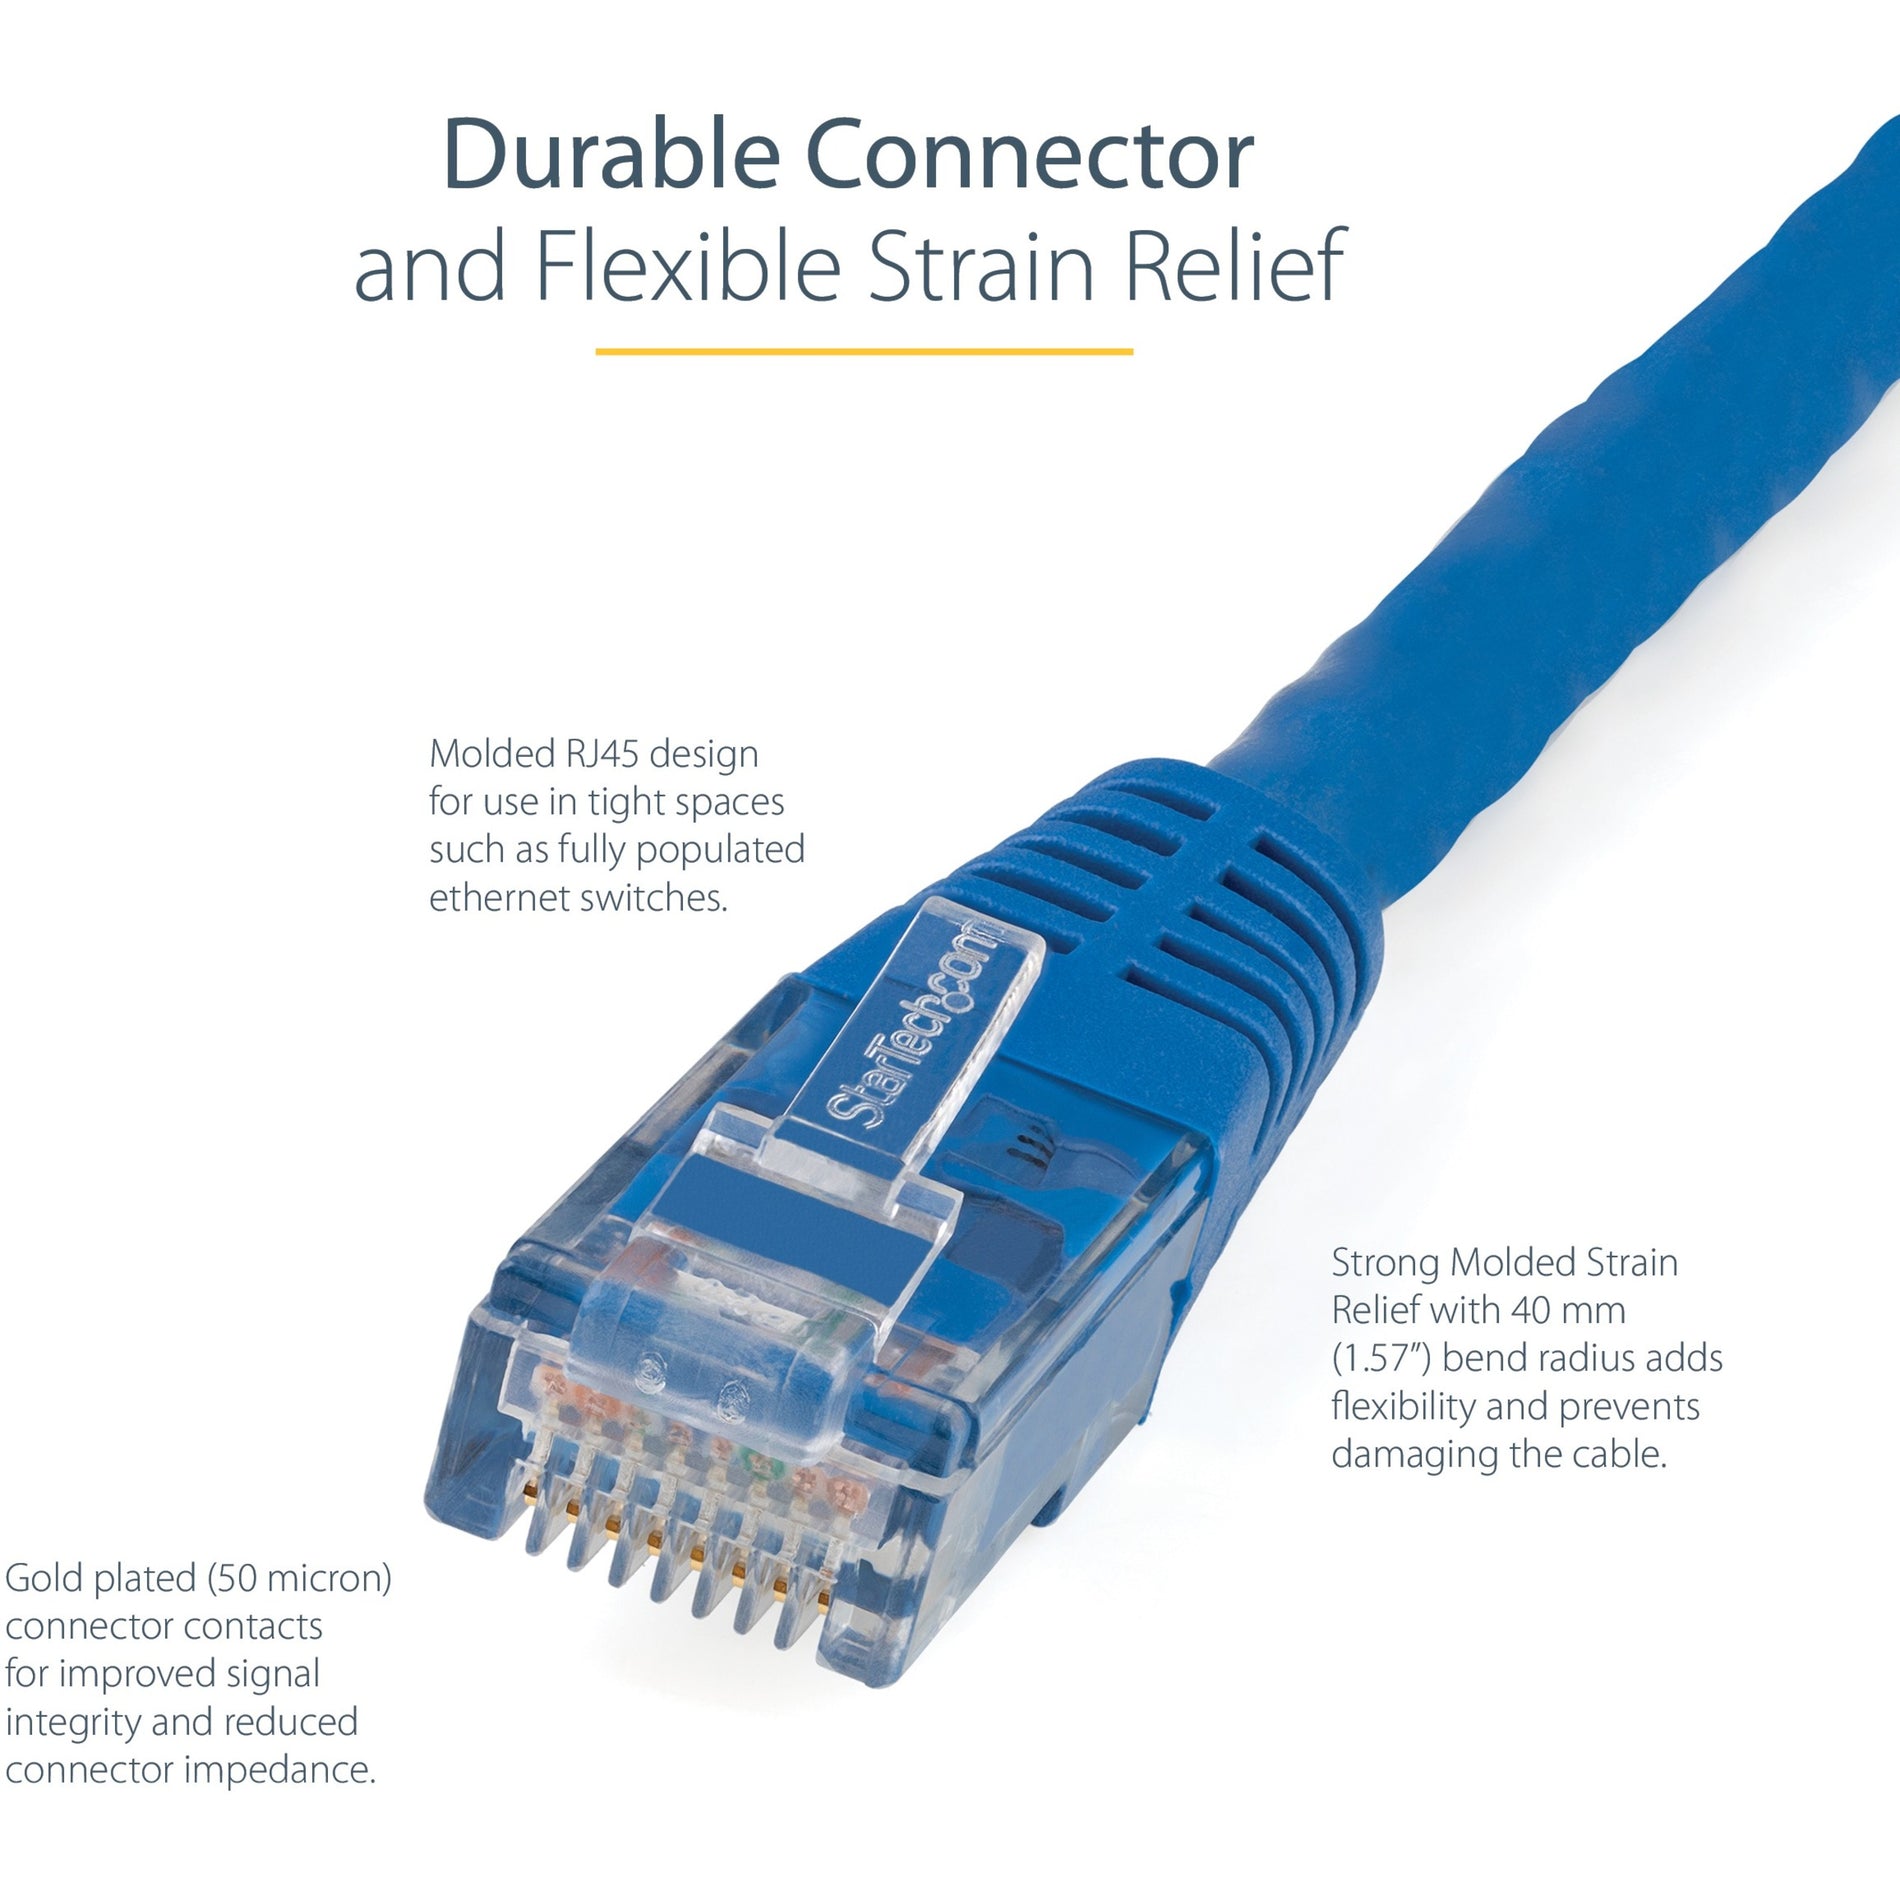 StarTech.com C6PATCH2BL 2ft Blue Cat6 UTP Patch Cable ETL Verified, 10 Gbit/s Data Transfer Rate, Strain Relief